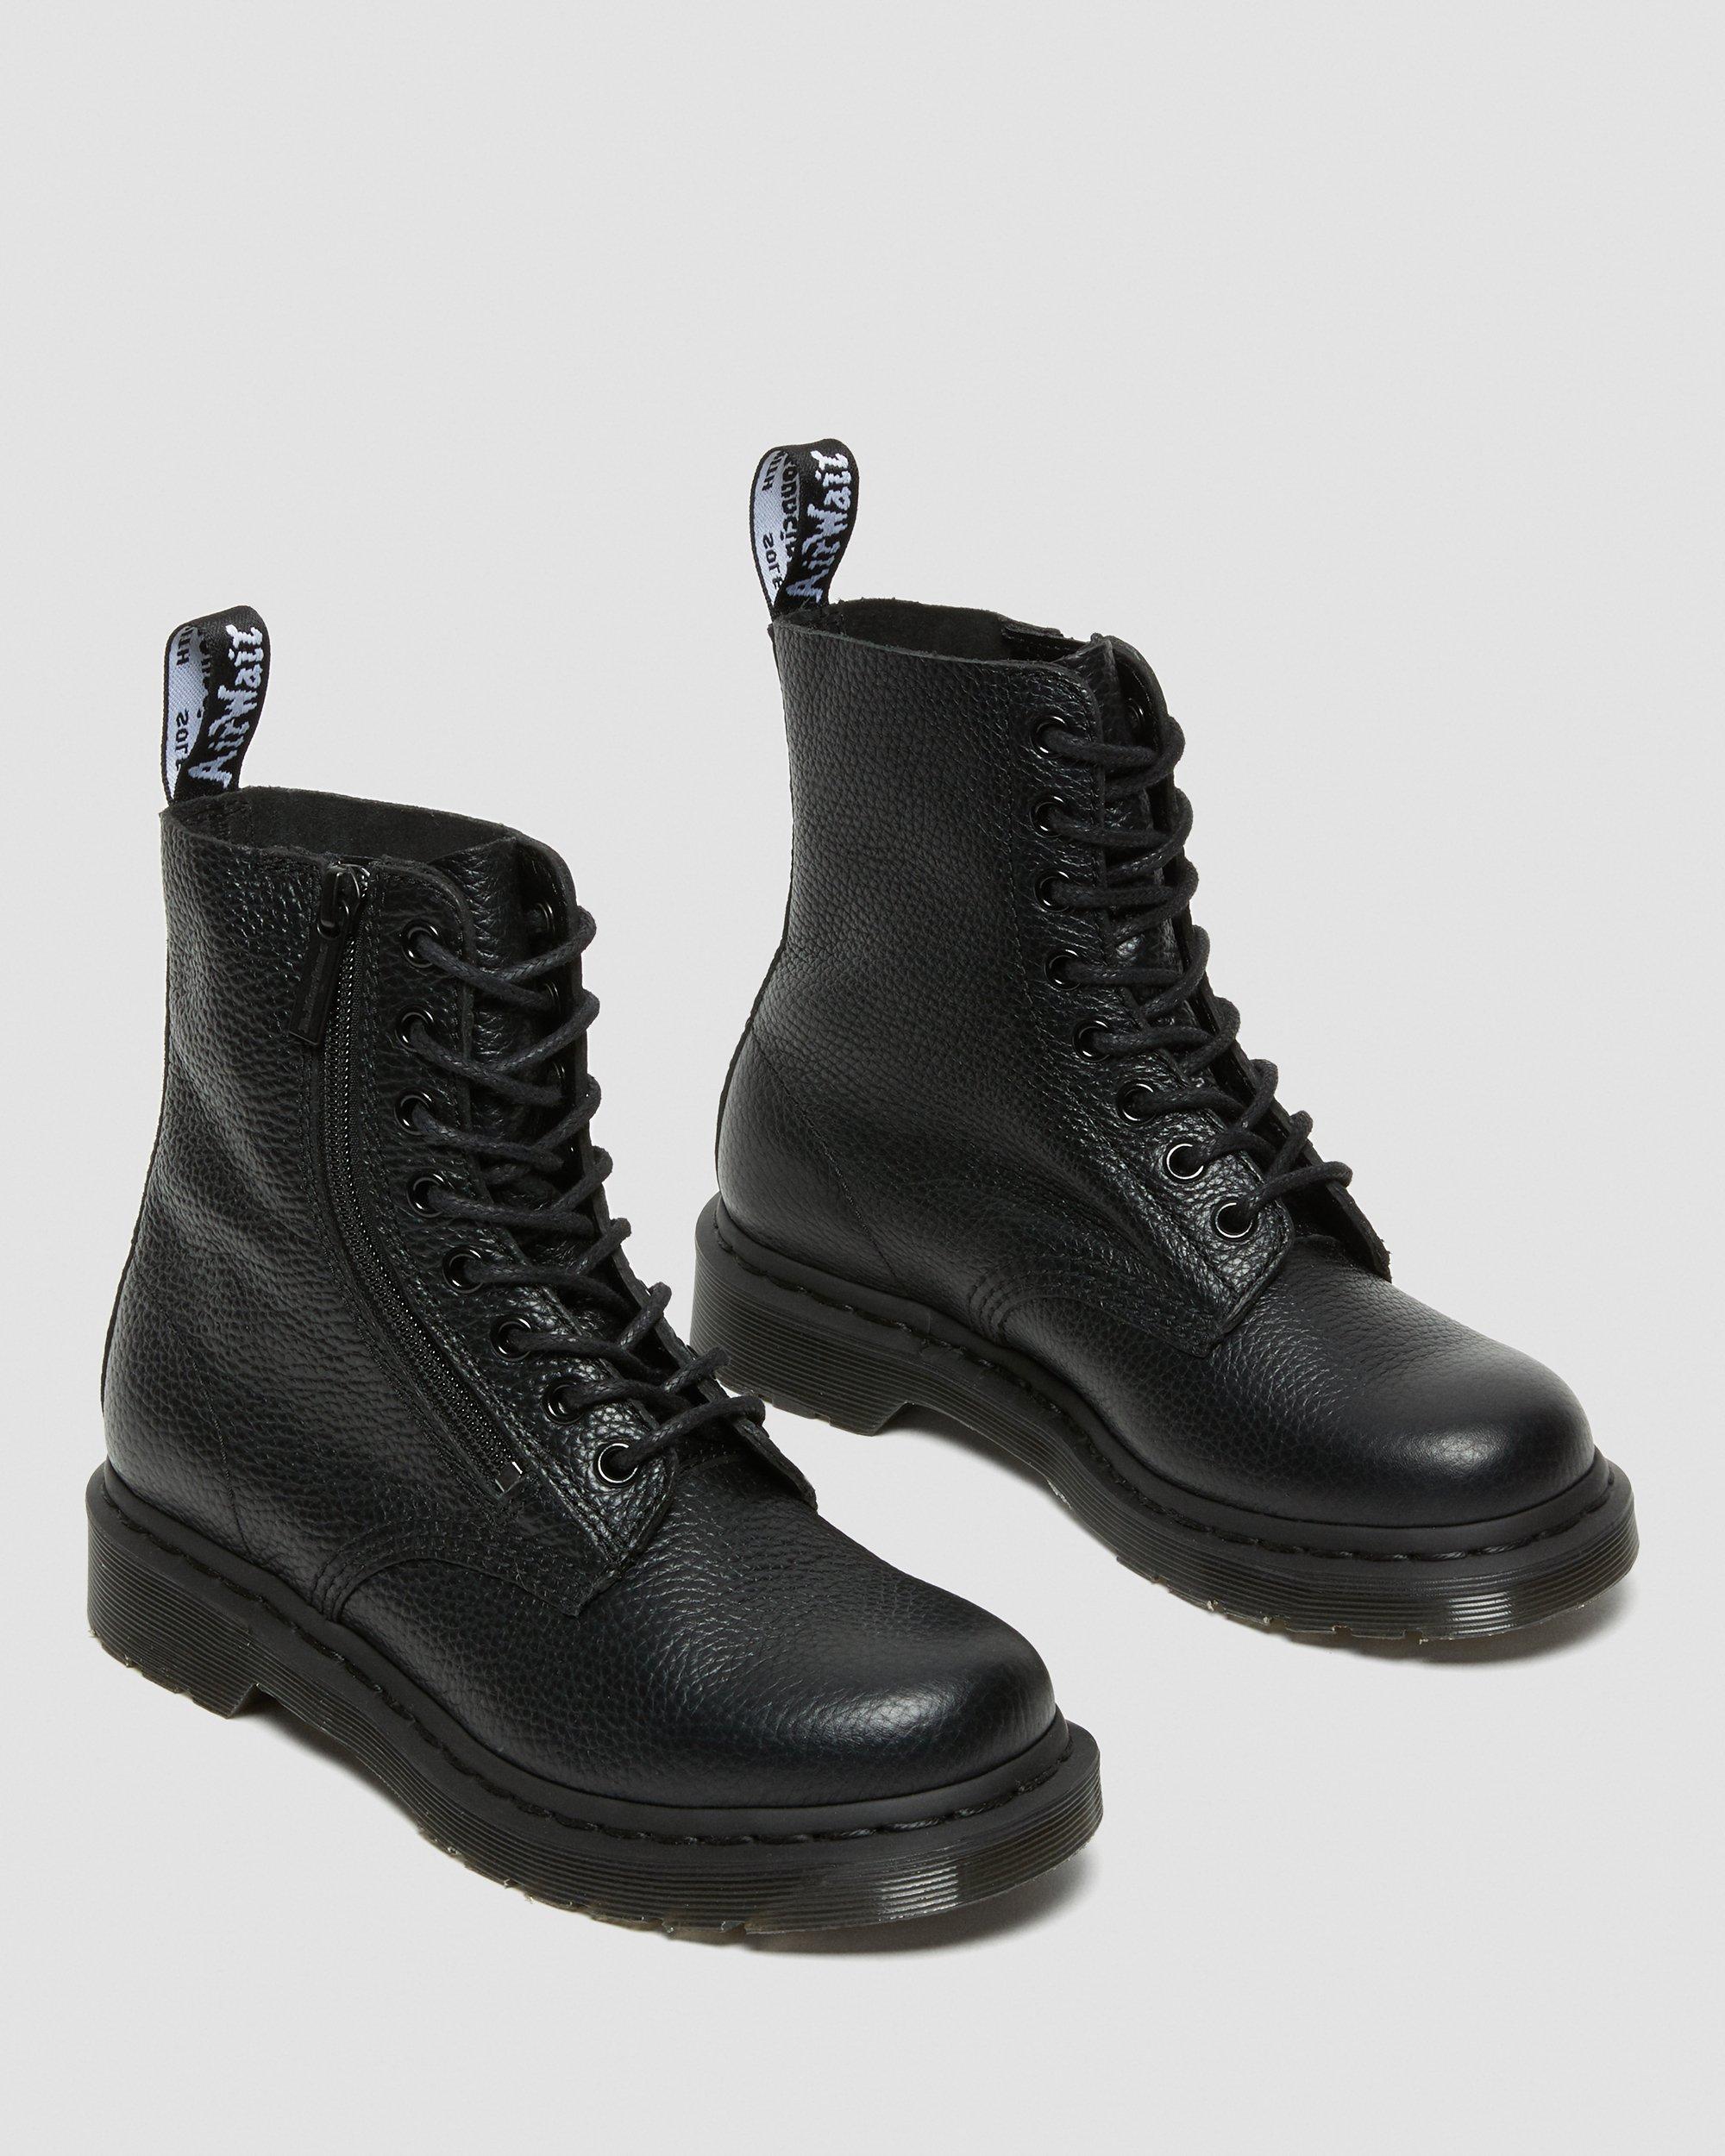 Boot Zippers